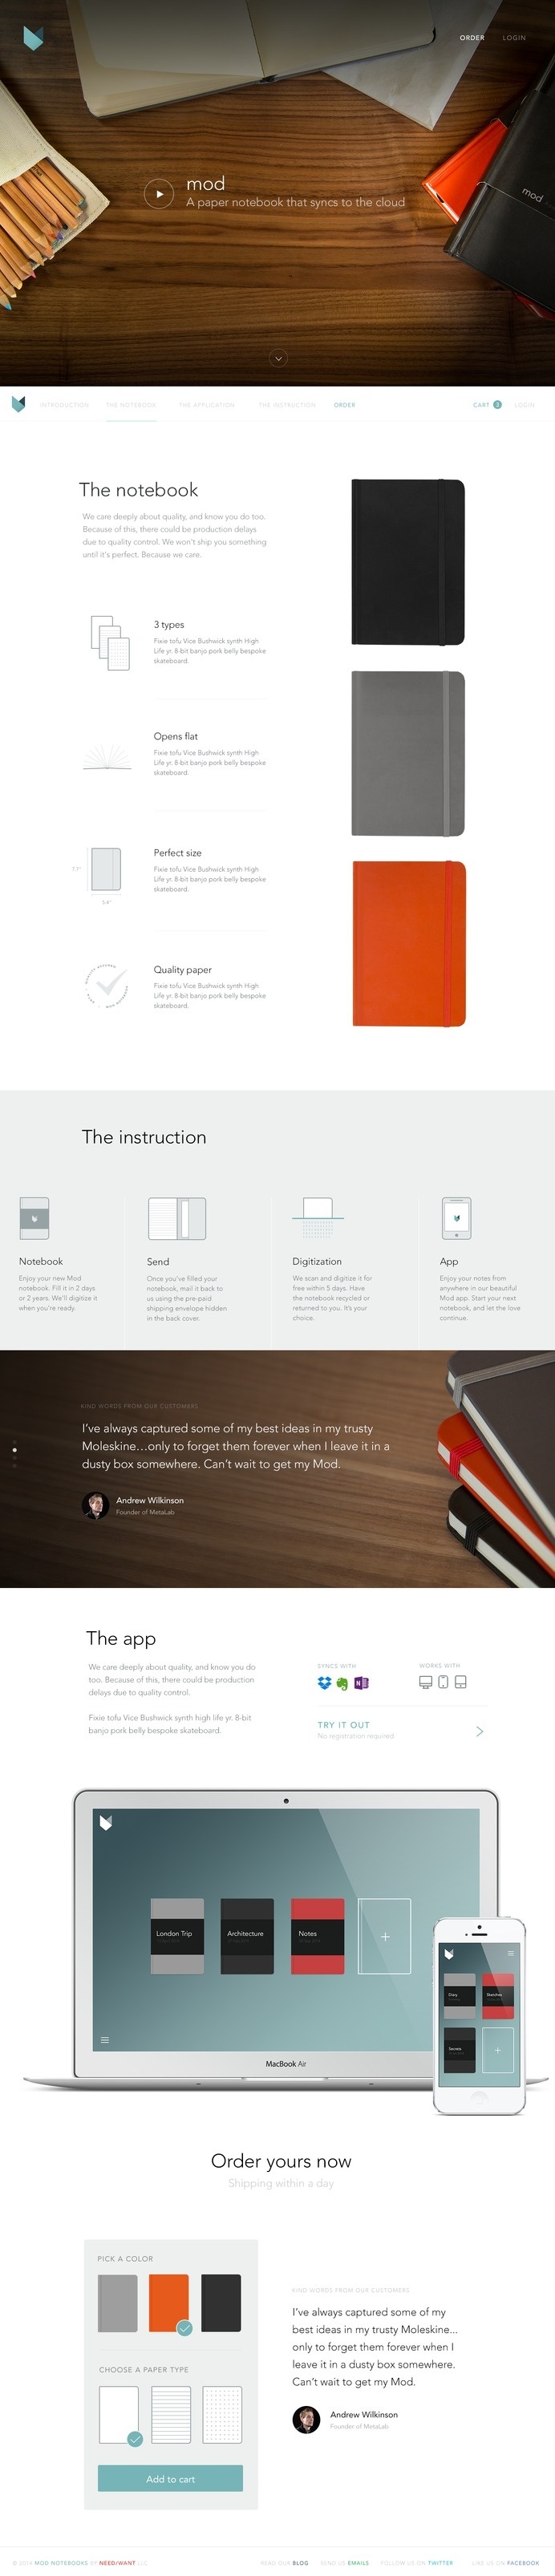 Product Page screen design idea #148: Mod-store-landing #web design #web site #landing page #product site